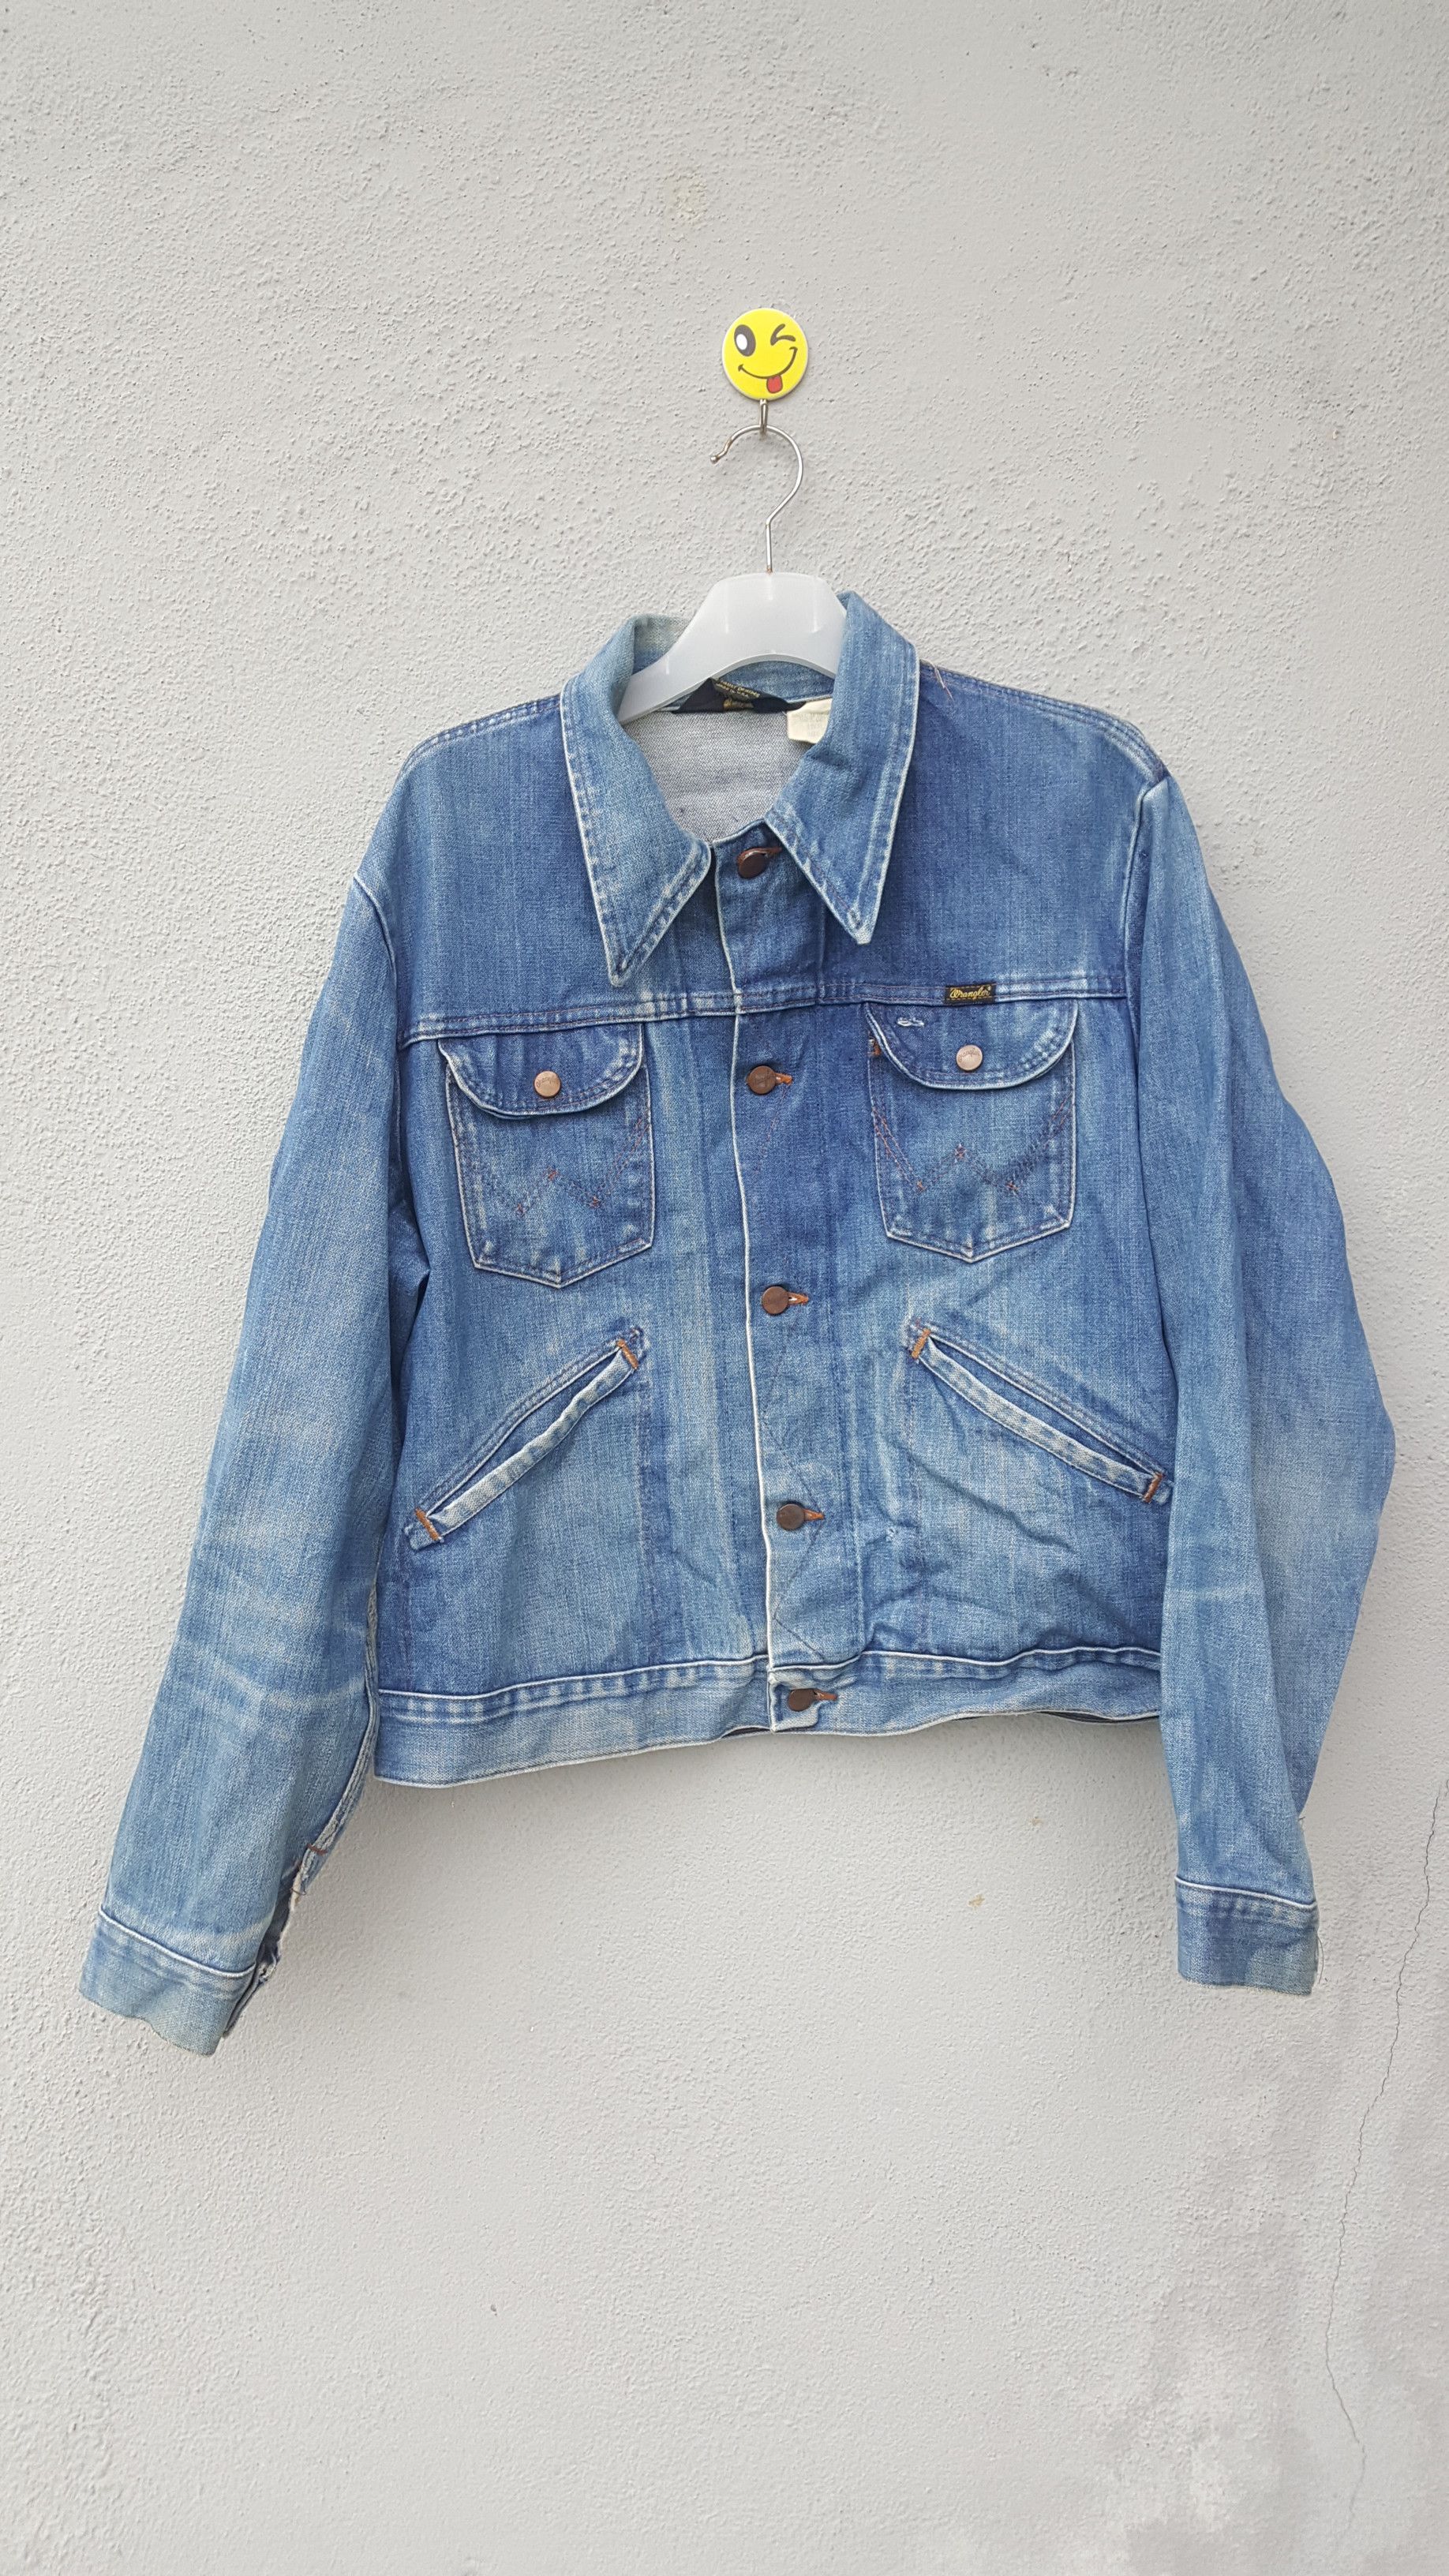 Vintage Rare 70s Wrangler Jacket Like Liam Gallagher | Grailed